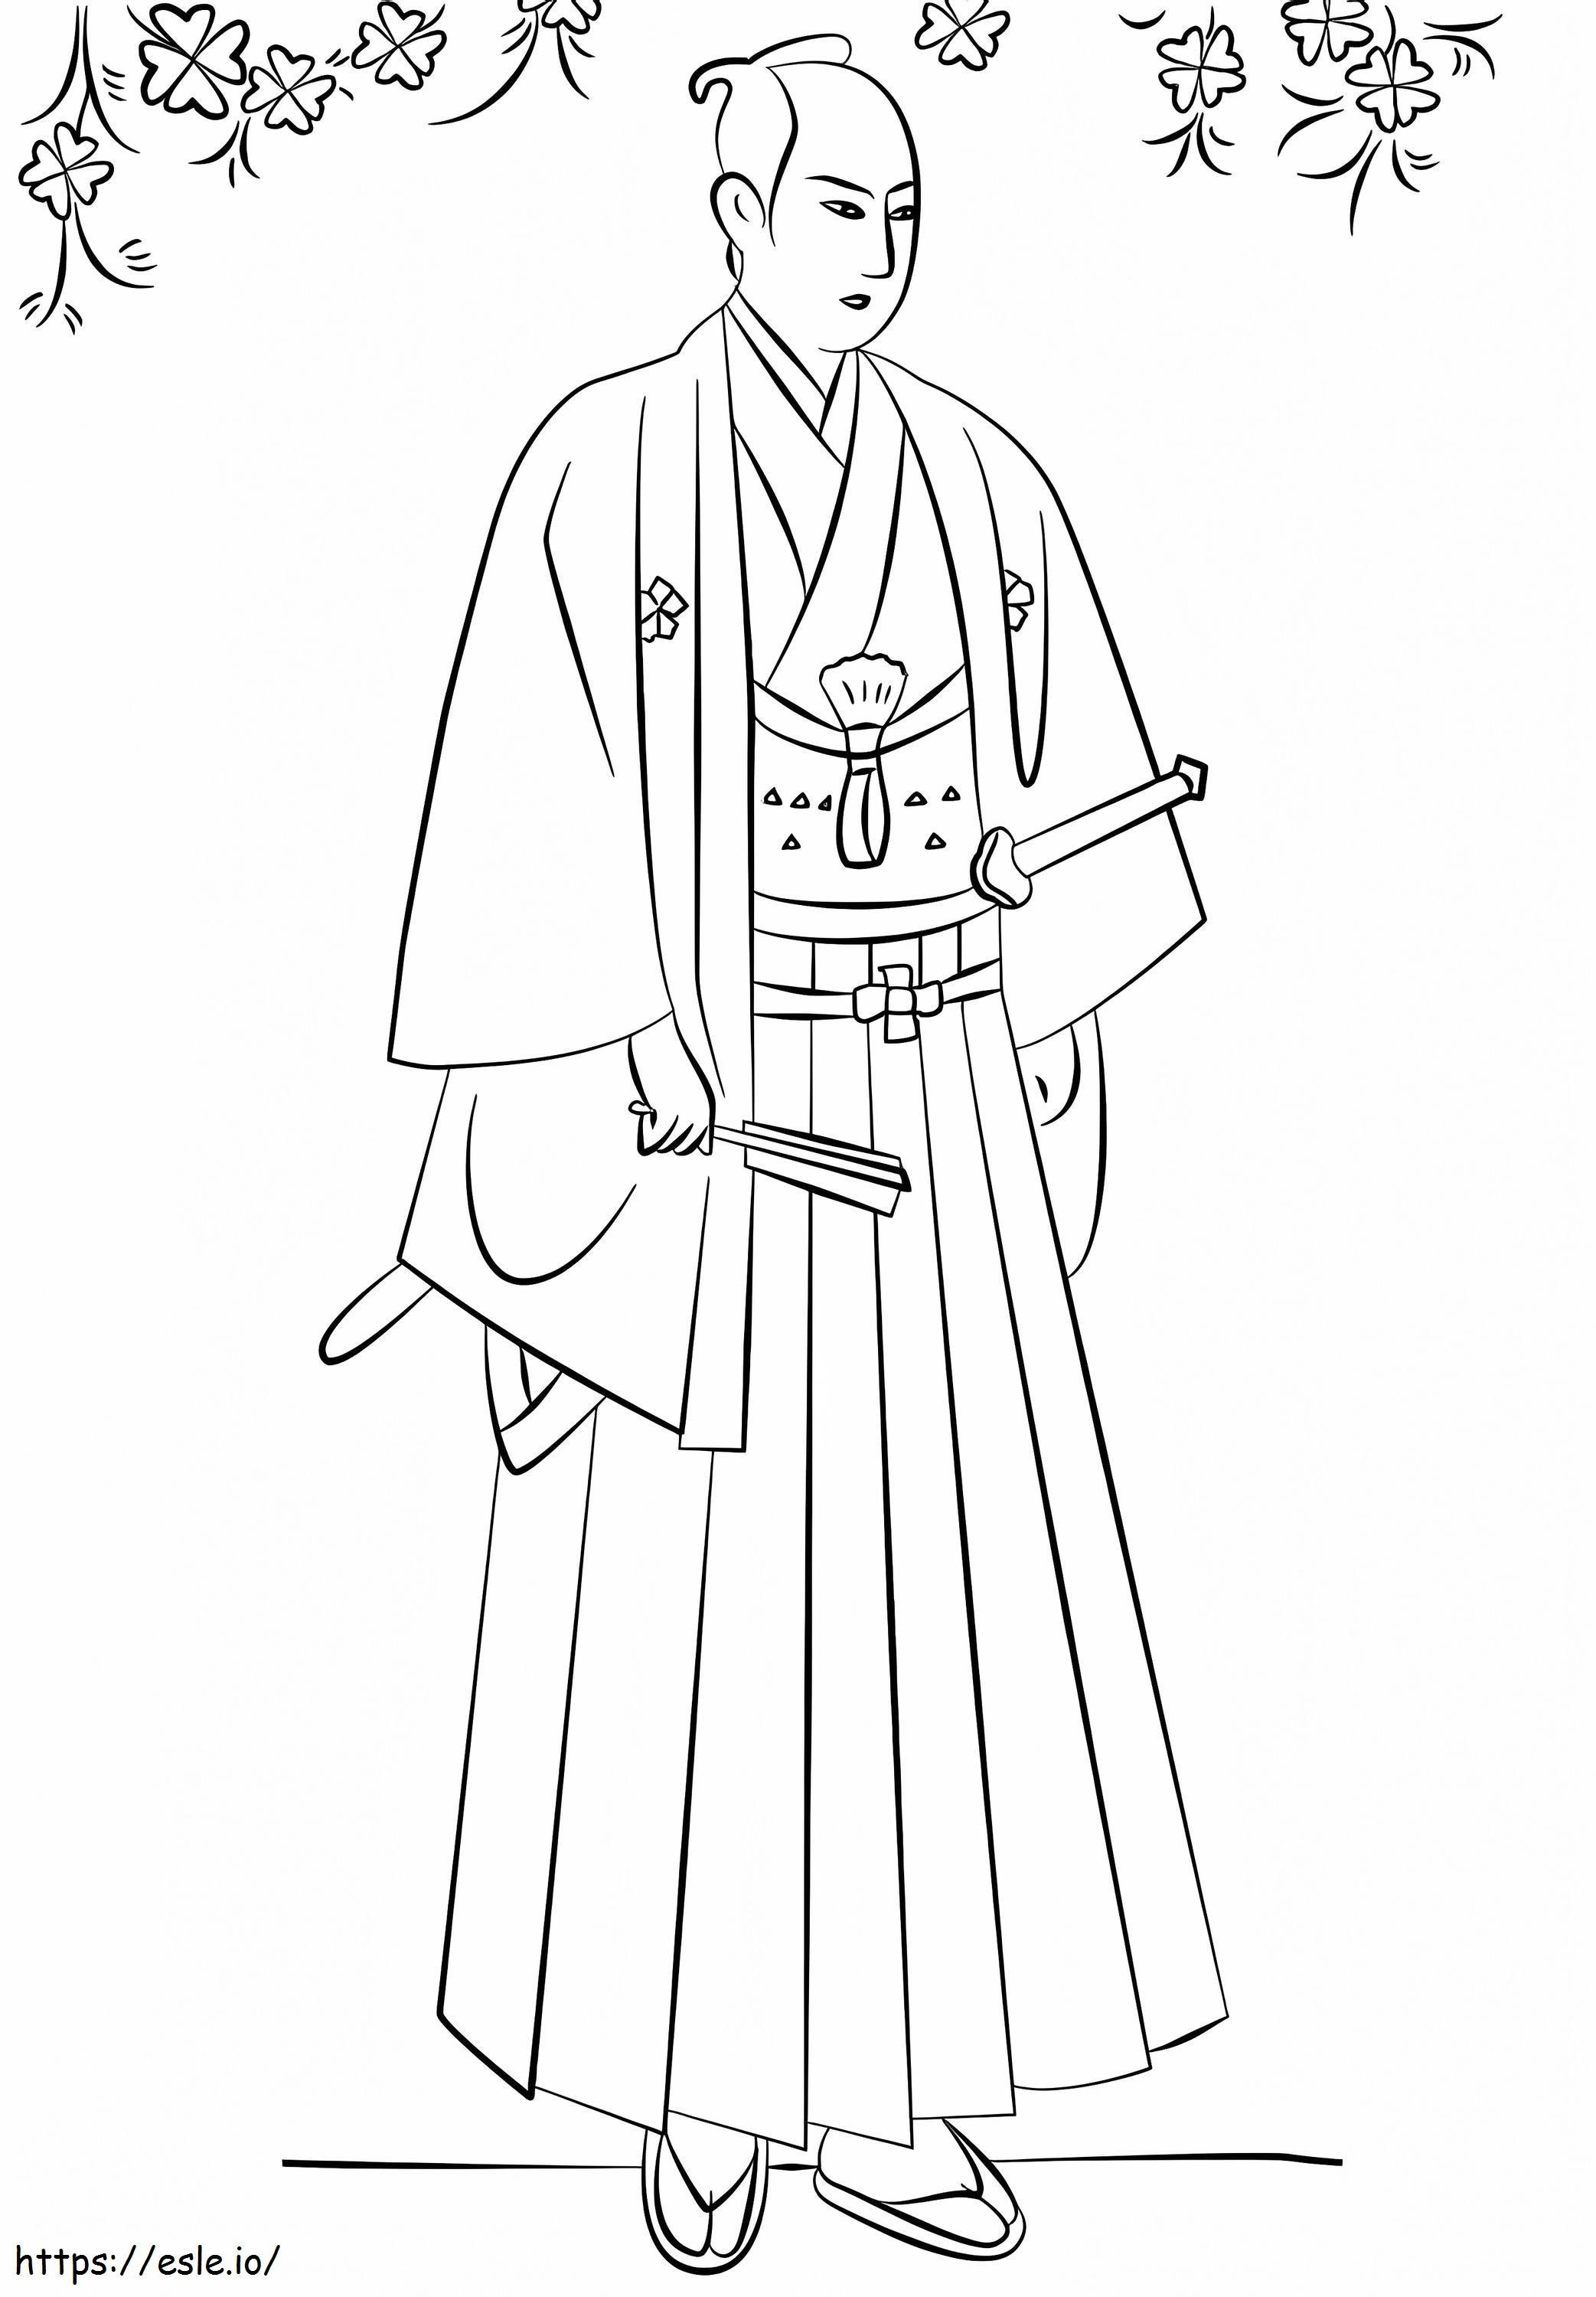 Japanischer Samurai ausmalbilder